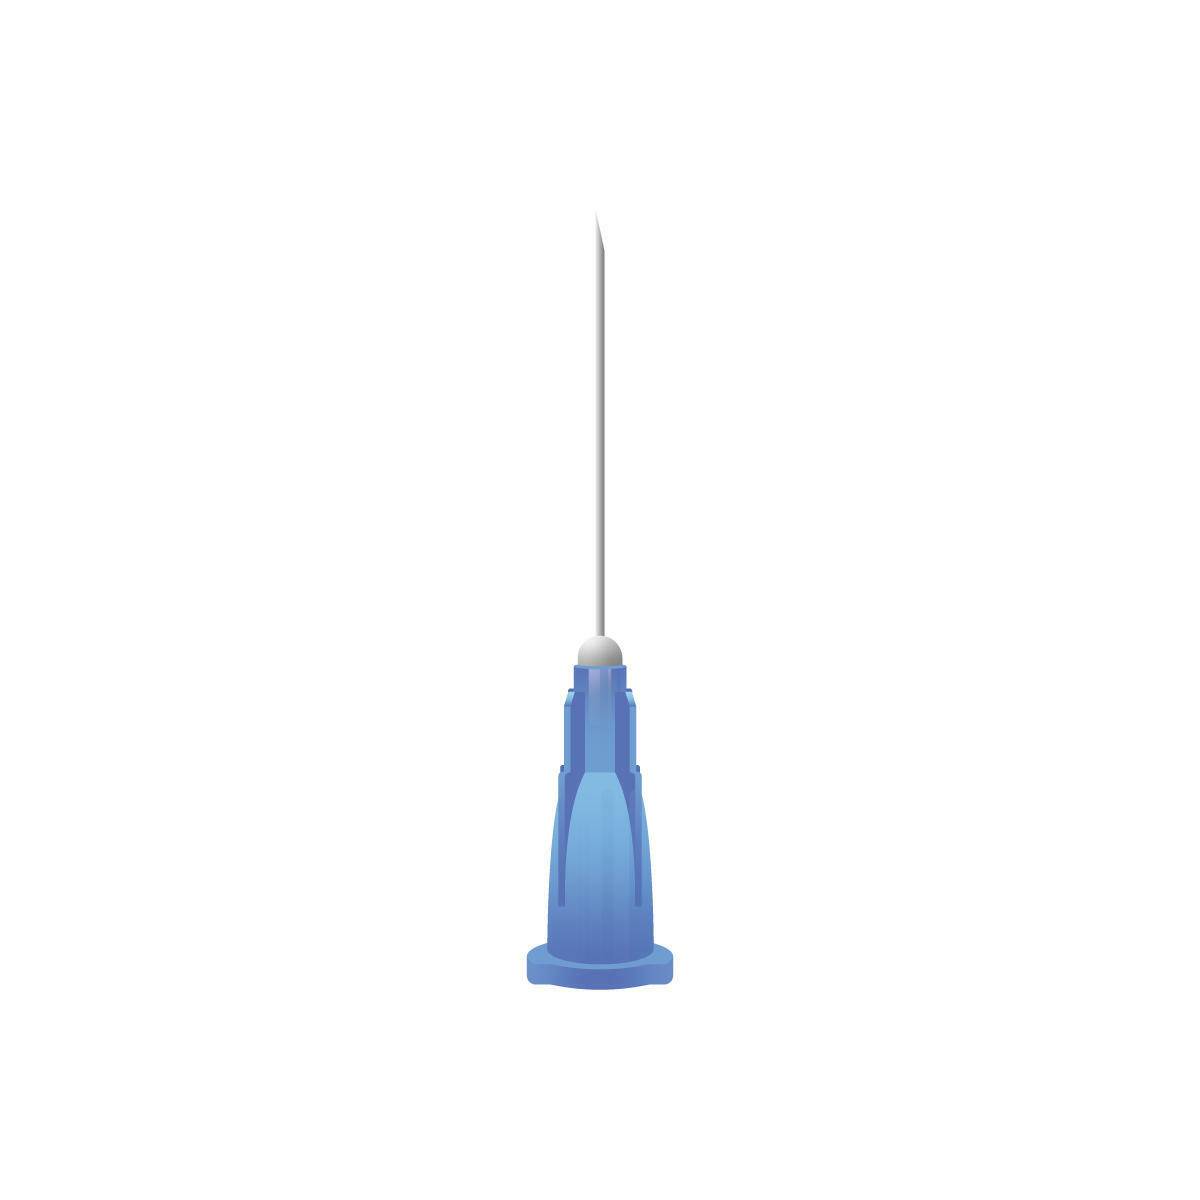 23g Blue 1 inch Unisharp Needles - UKMEDI